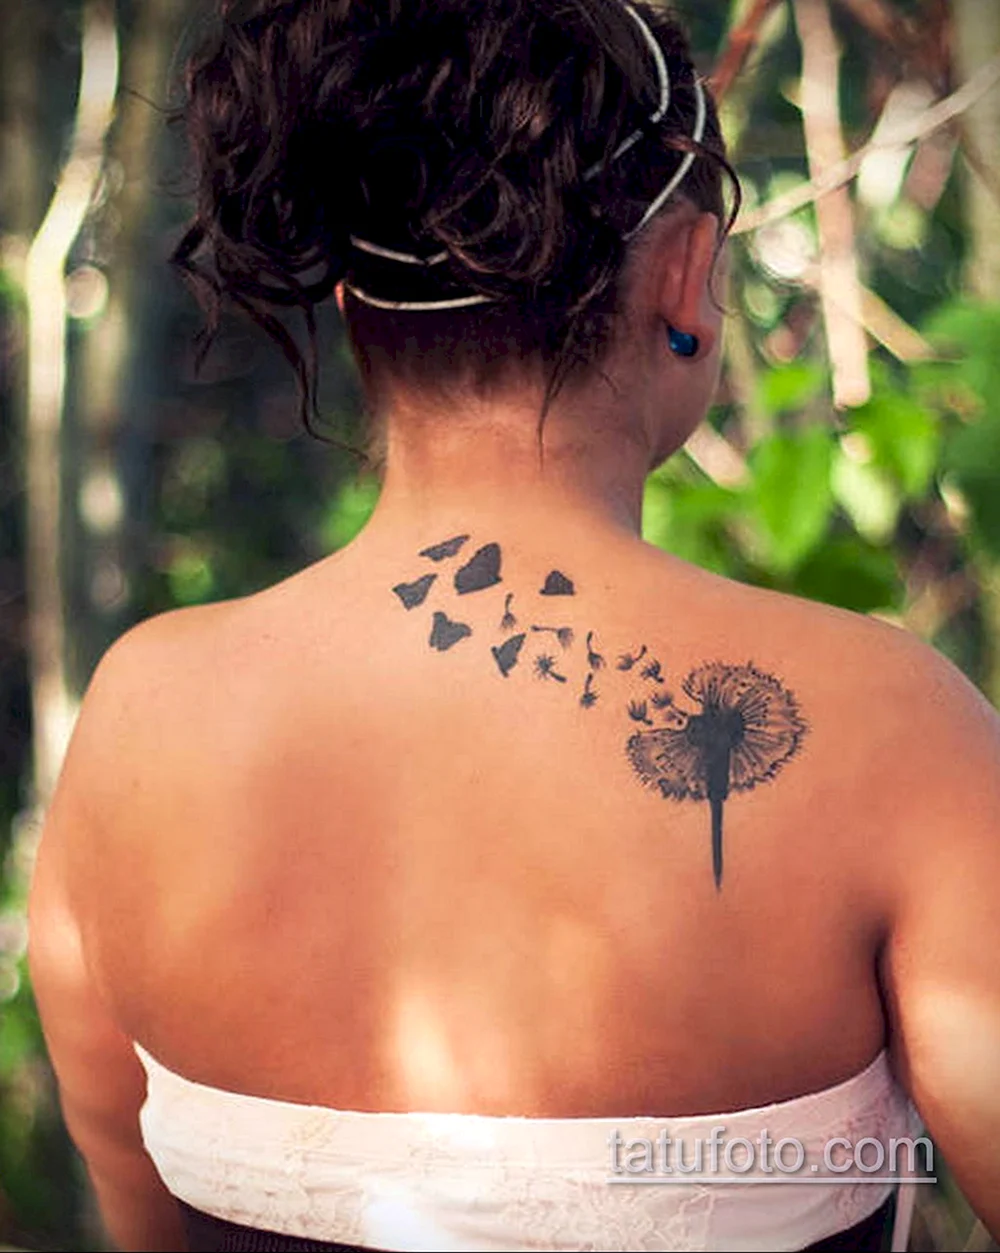 Tattoo for women Shoulders